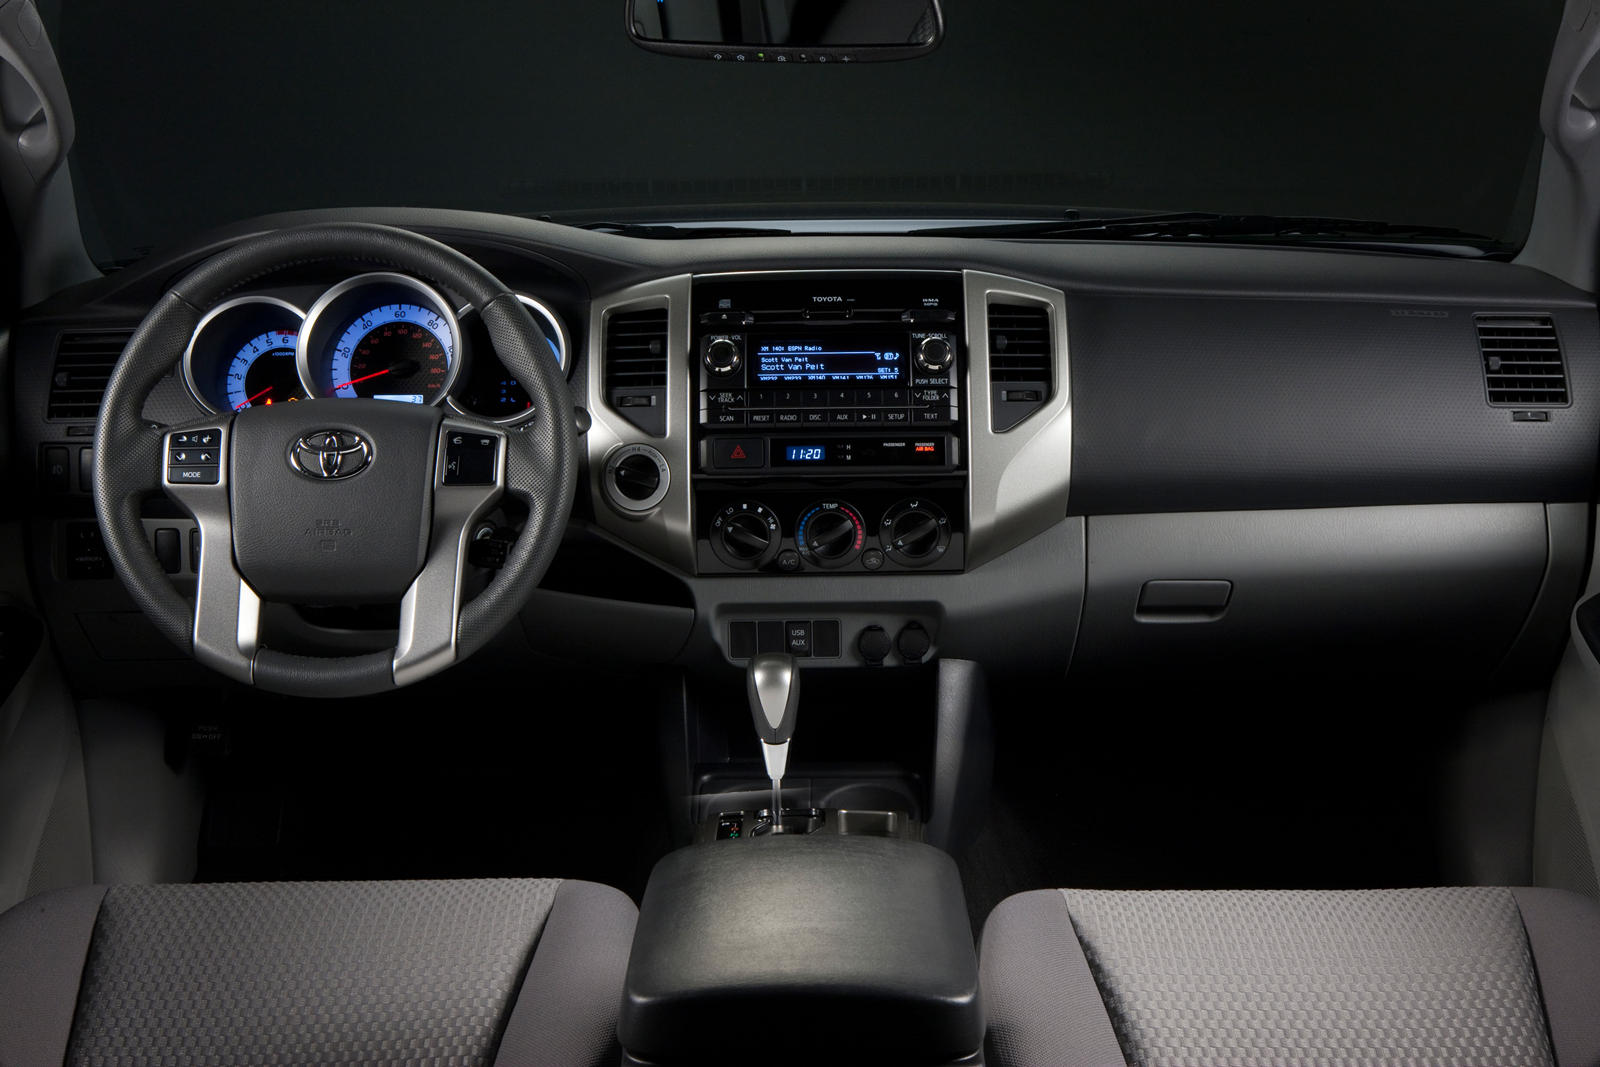 2014 Toyota Tacoma Infotainment System